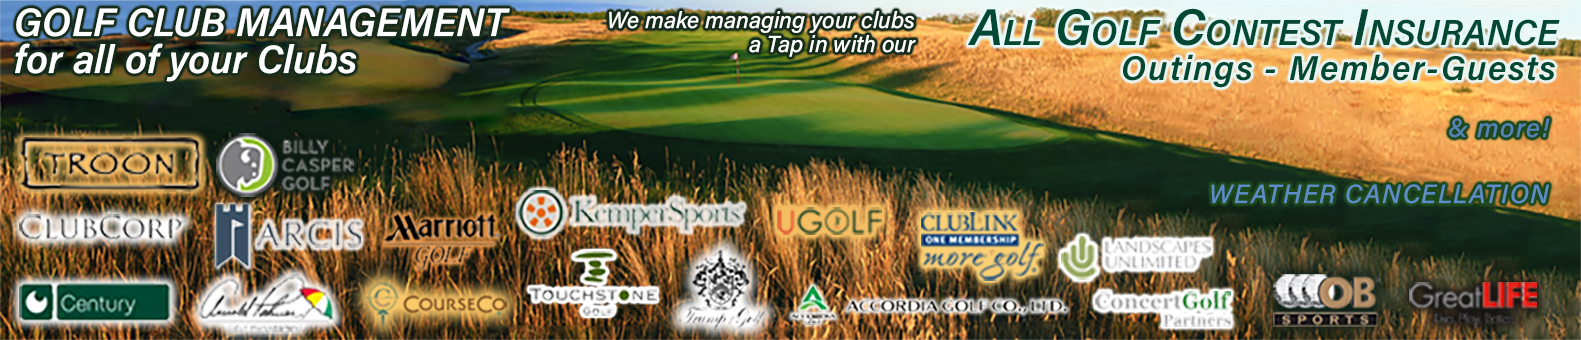 Golf Management Insurance Hole-in-WON.com